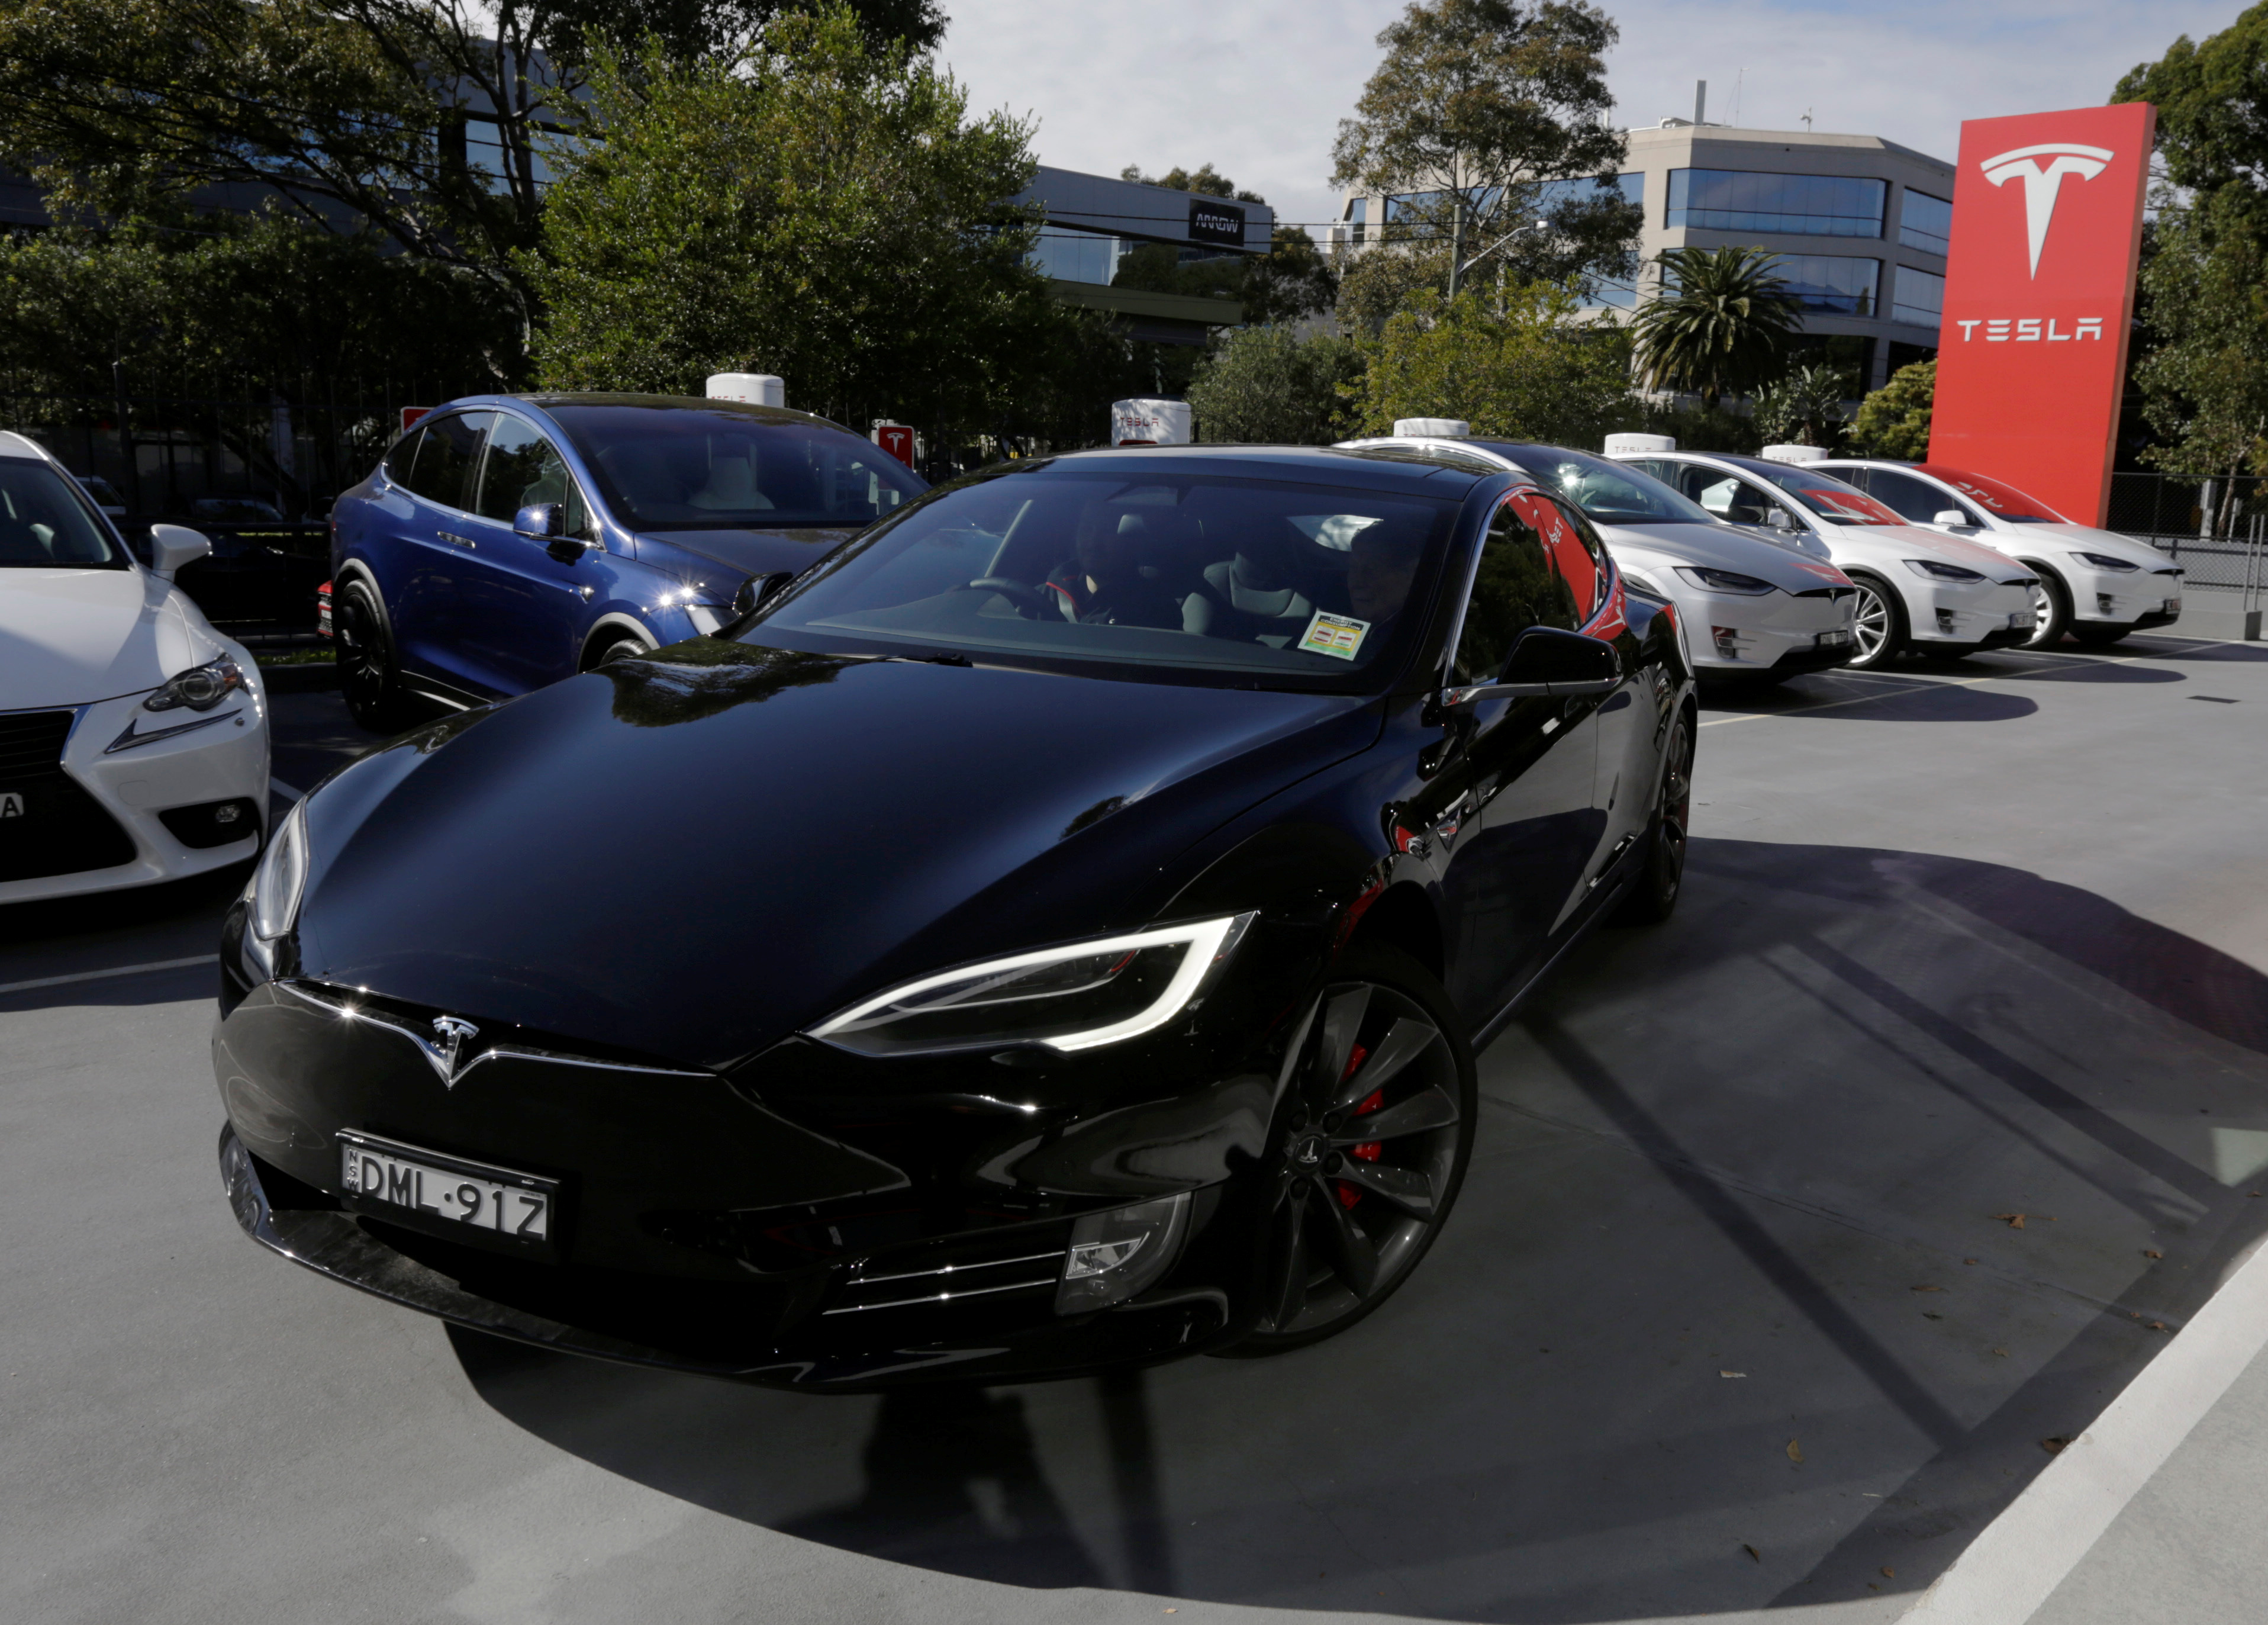 A Tesla Model S electric car is taken for a test drive at a Tesla car dealership in Sydney